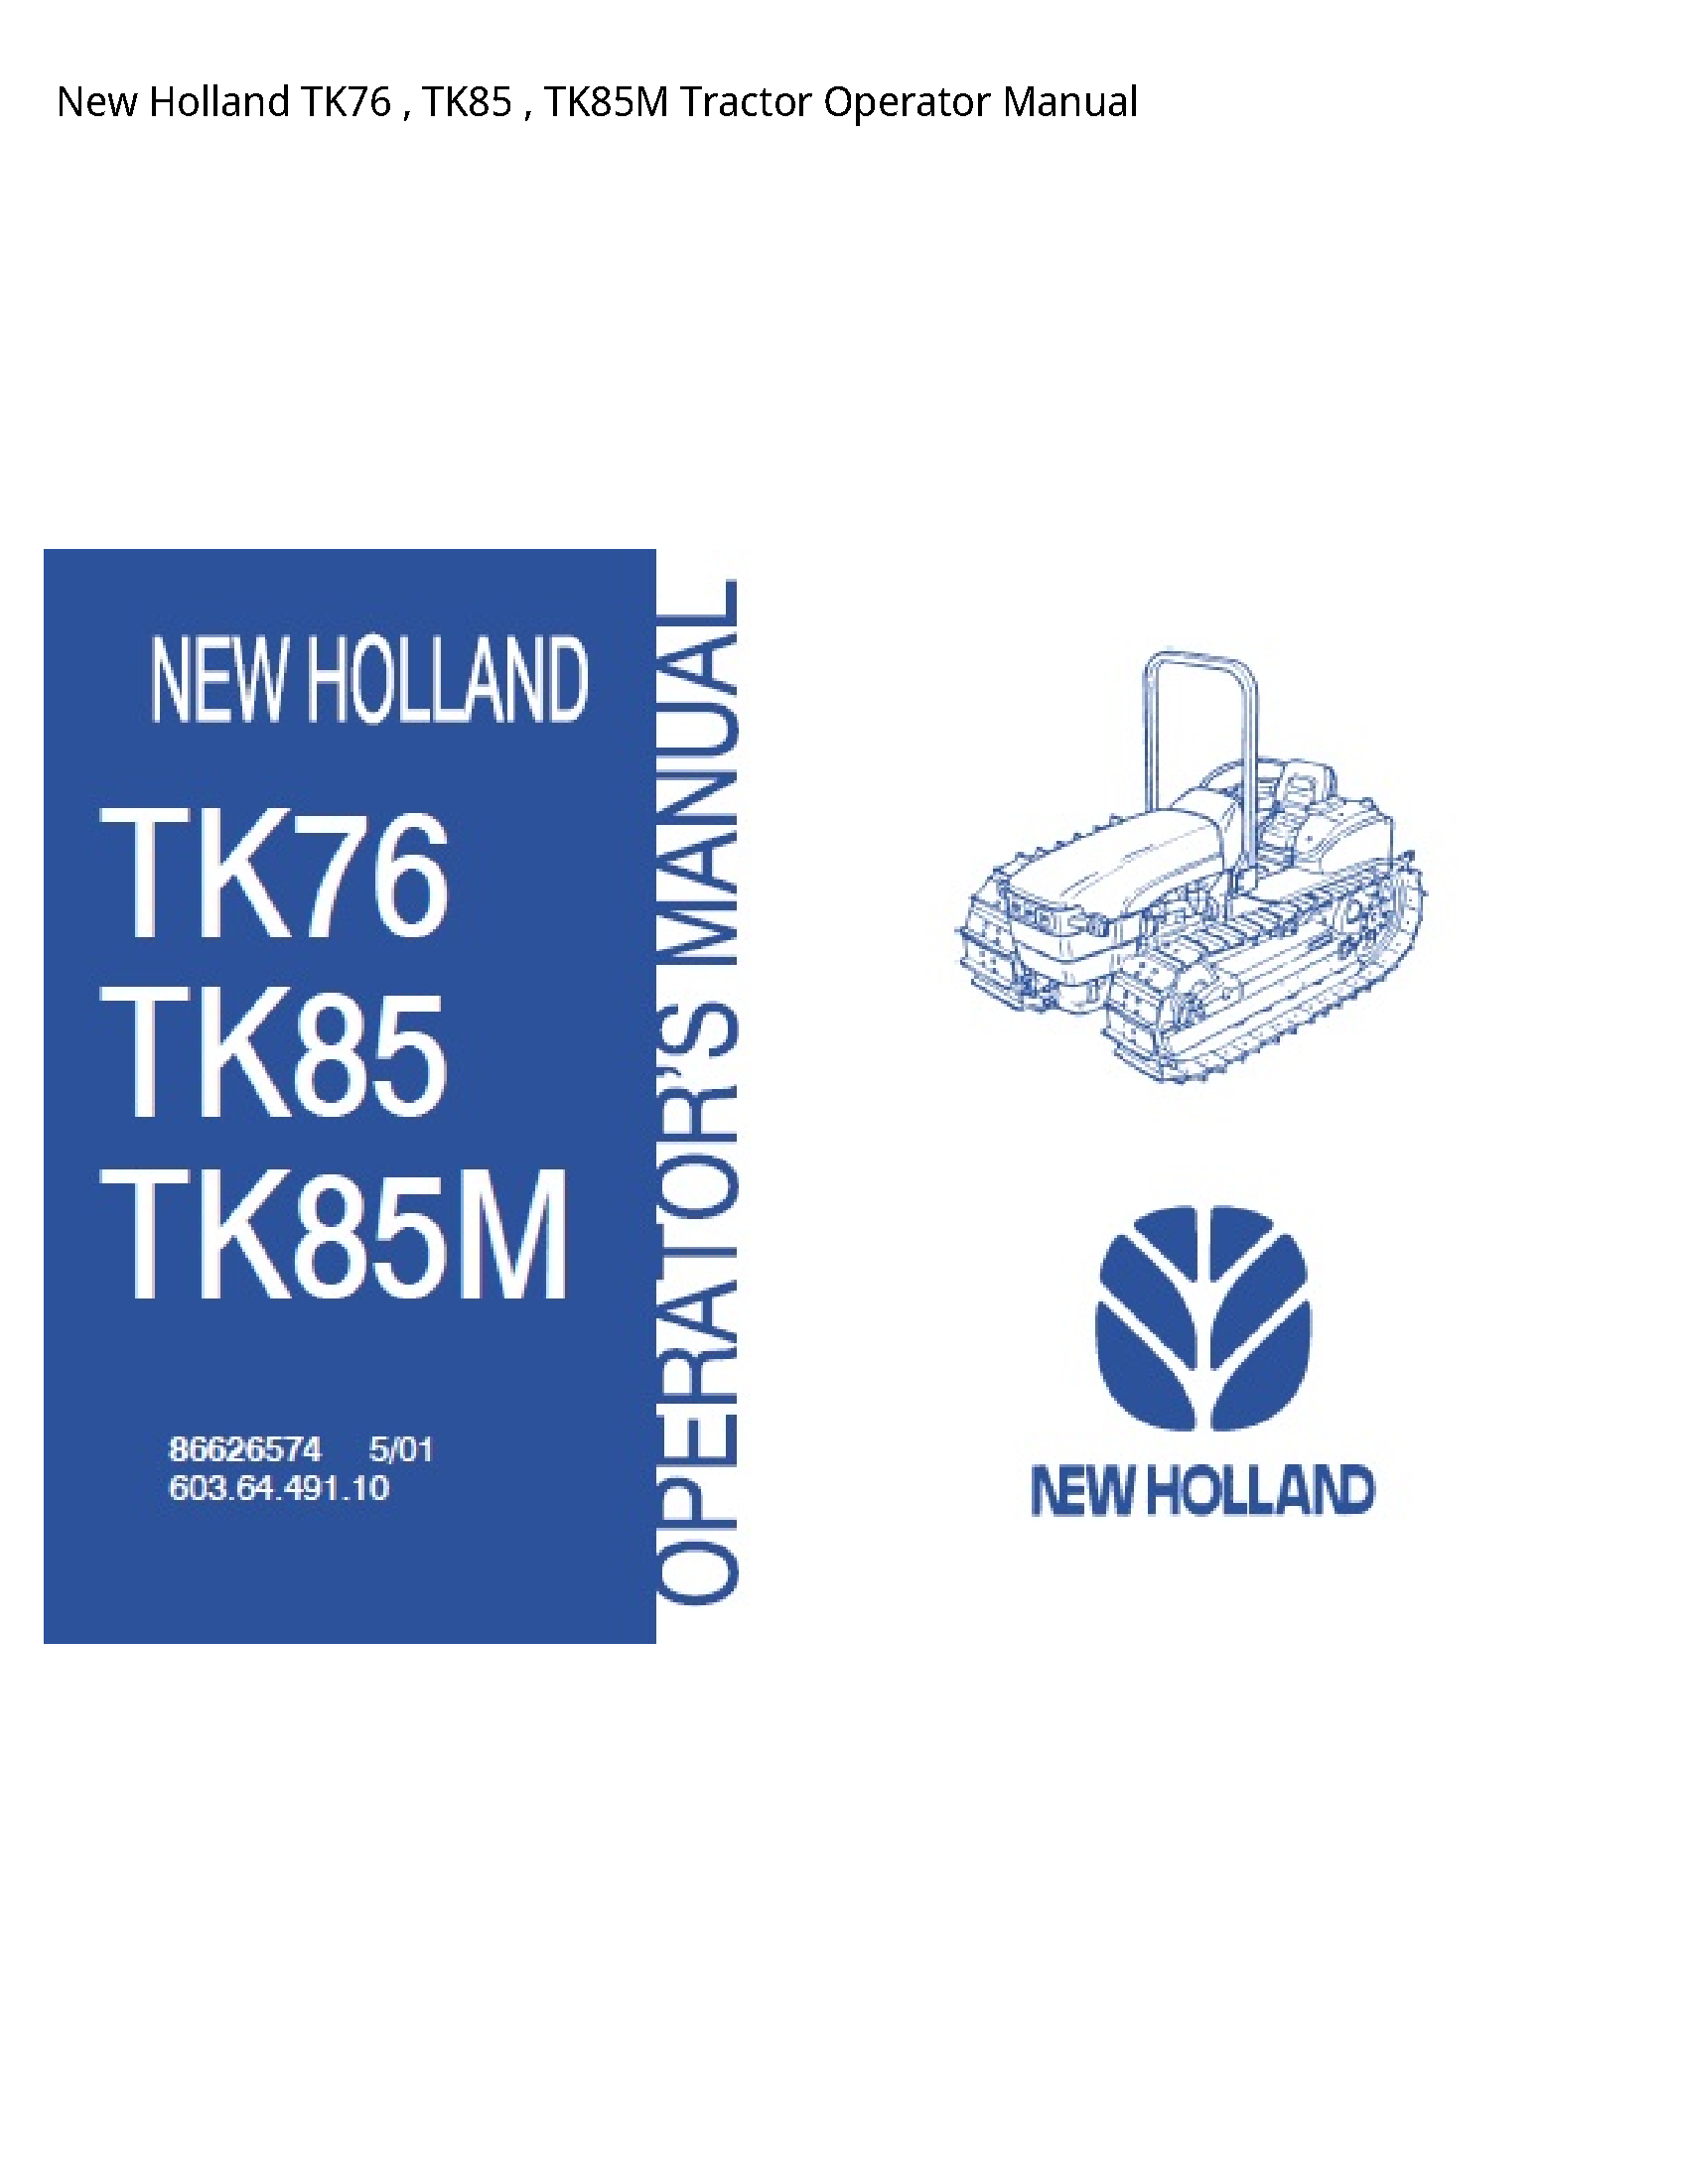 New Holland TK76 Tractor Operator manual